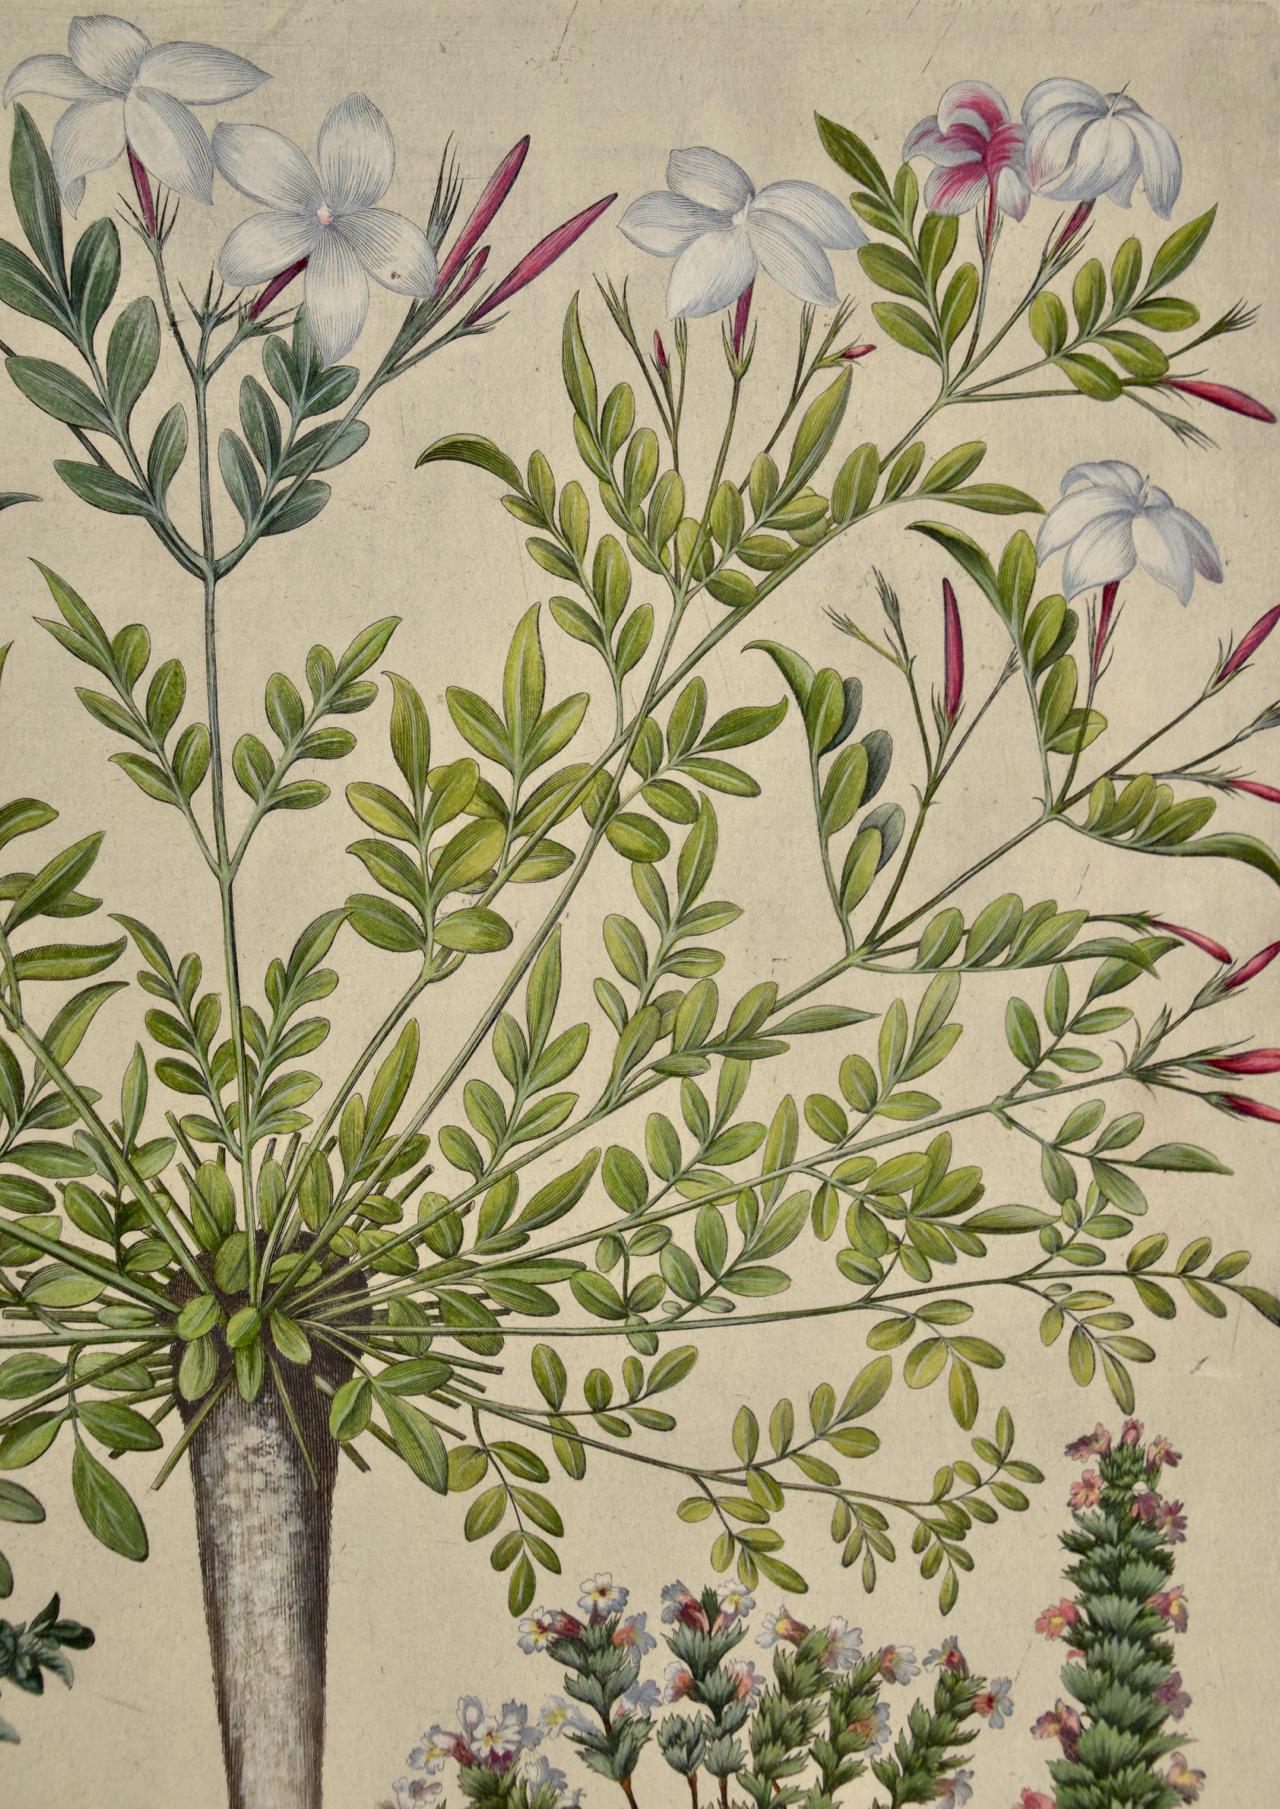 Flowering Jasmine and Laurel Plants: A Besler Hand-colored Botanical Engraving - Academic Print by Basilius Besler